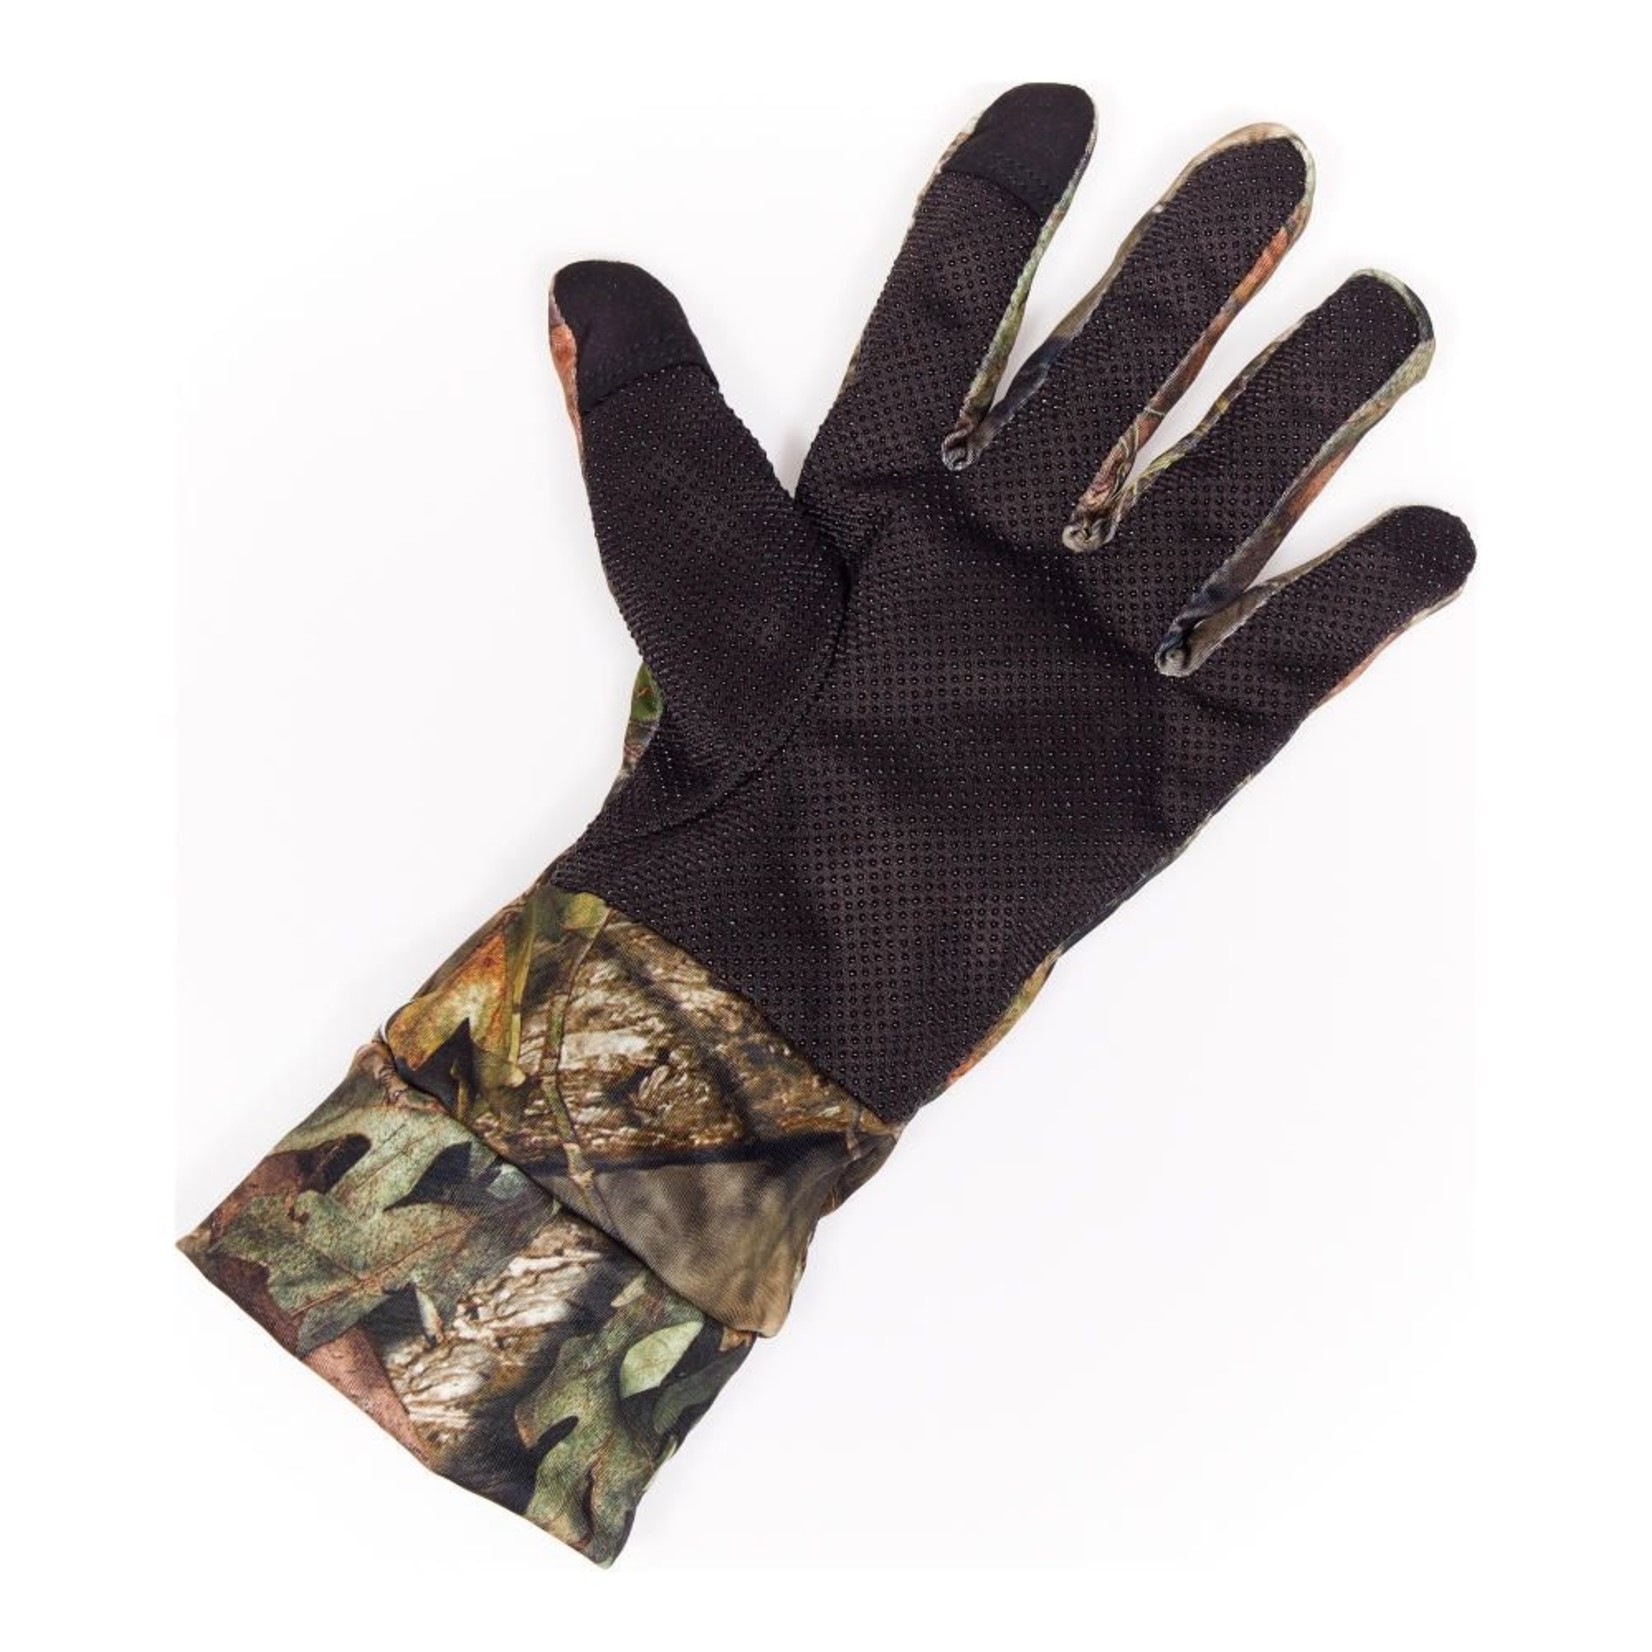 Allen Spandex Gloves, Mo Country